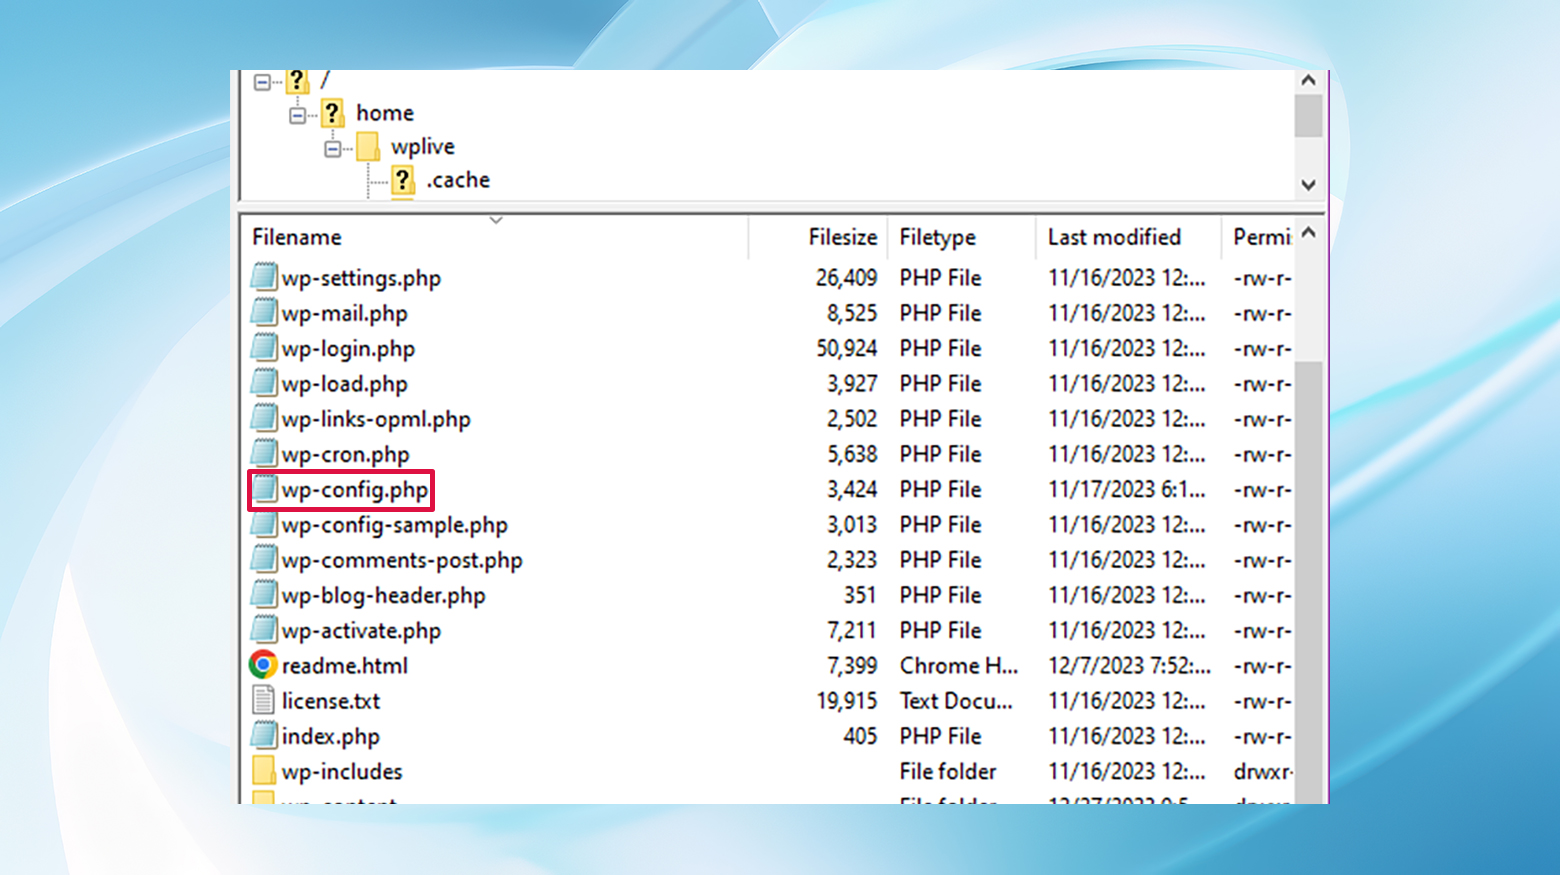 FTP 用戶端顯示網站的 wp-config.php 文件，以紅色突出顯示。